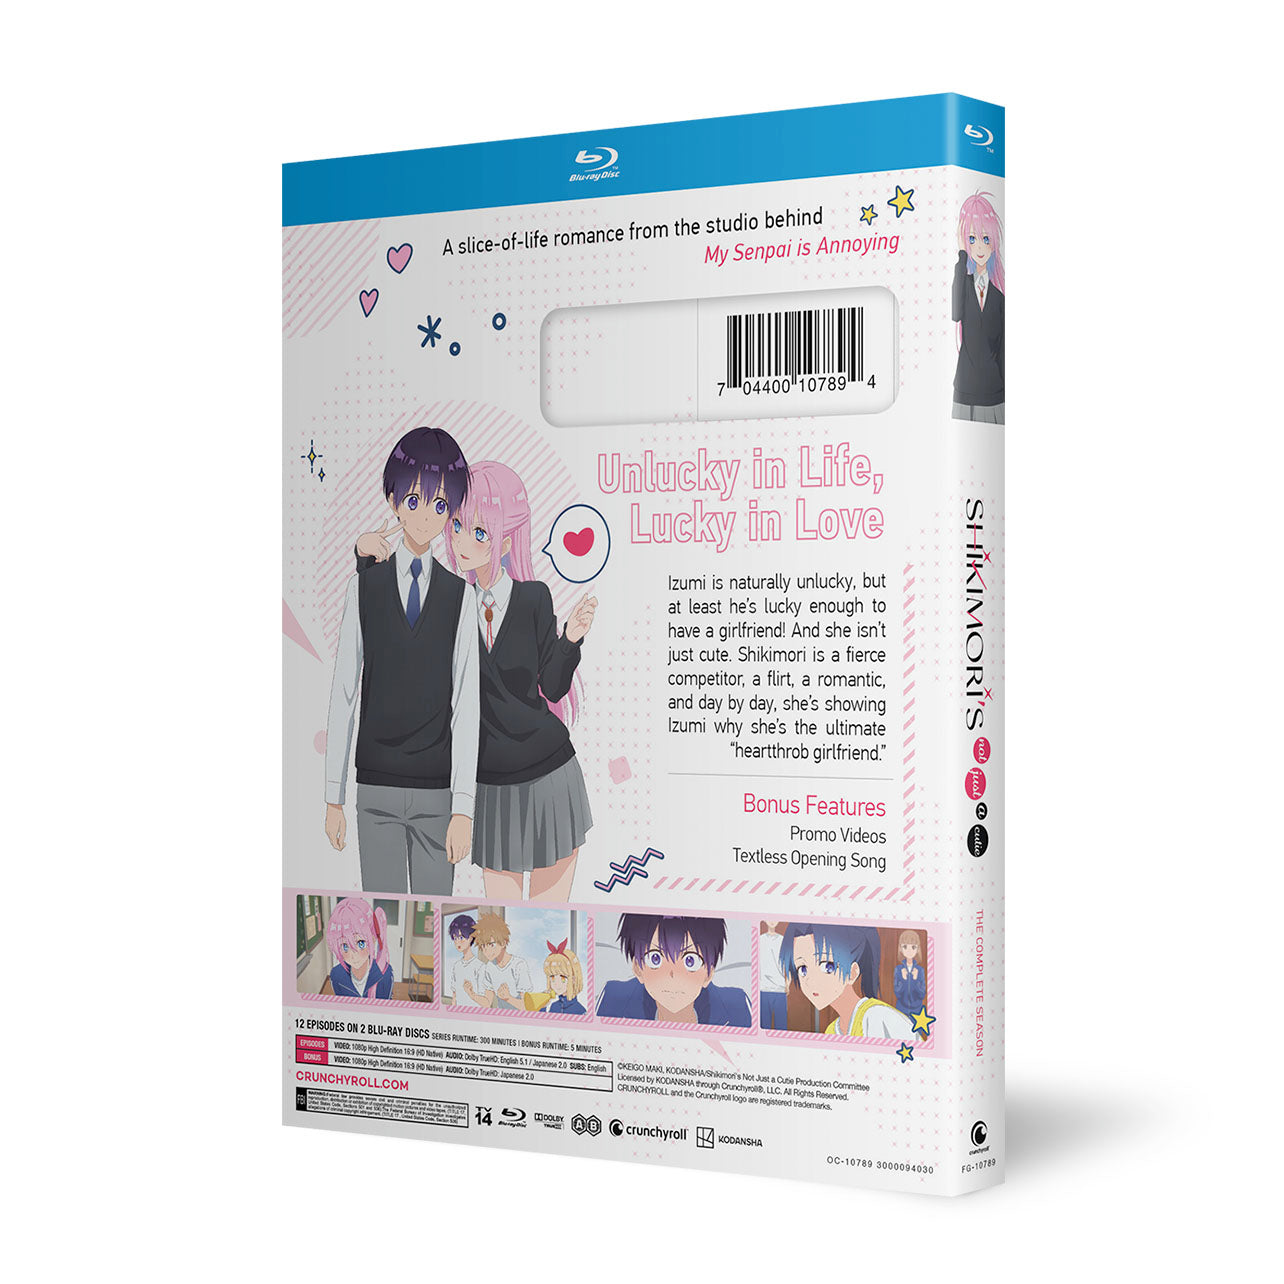 Shikimori's Not Just a Cutie - The Complete Season - Blu-Ray image count 2